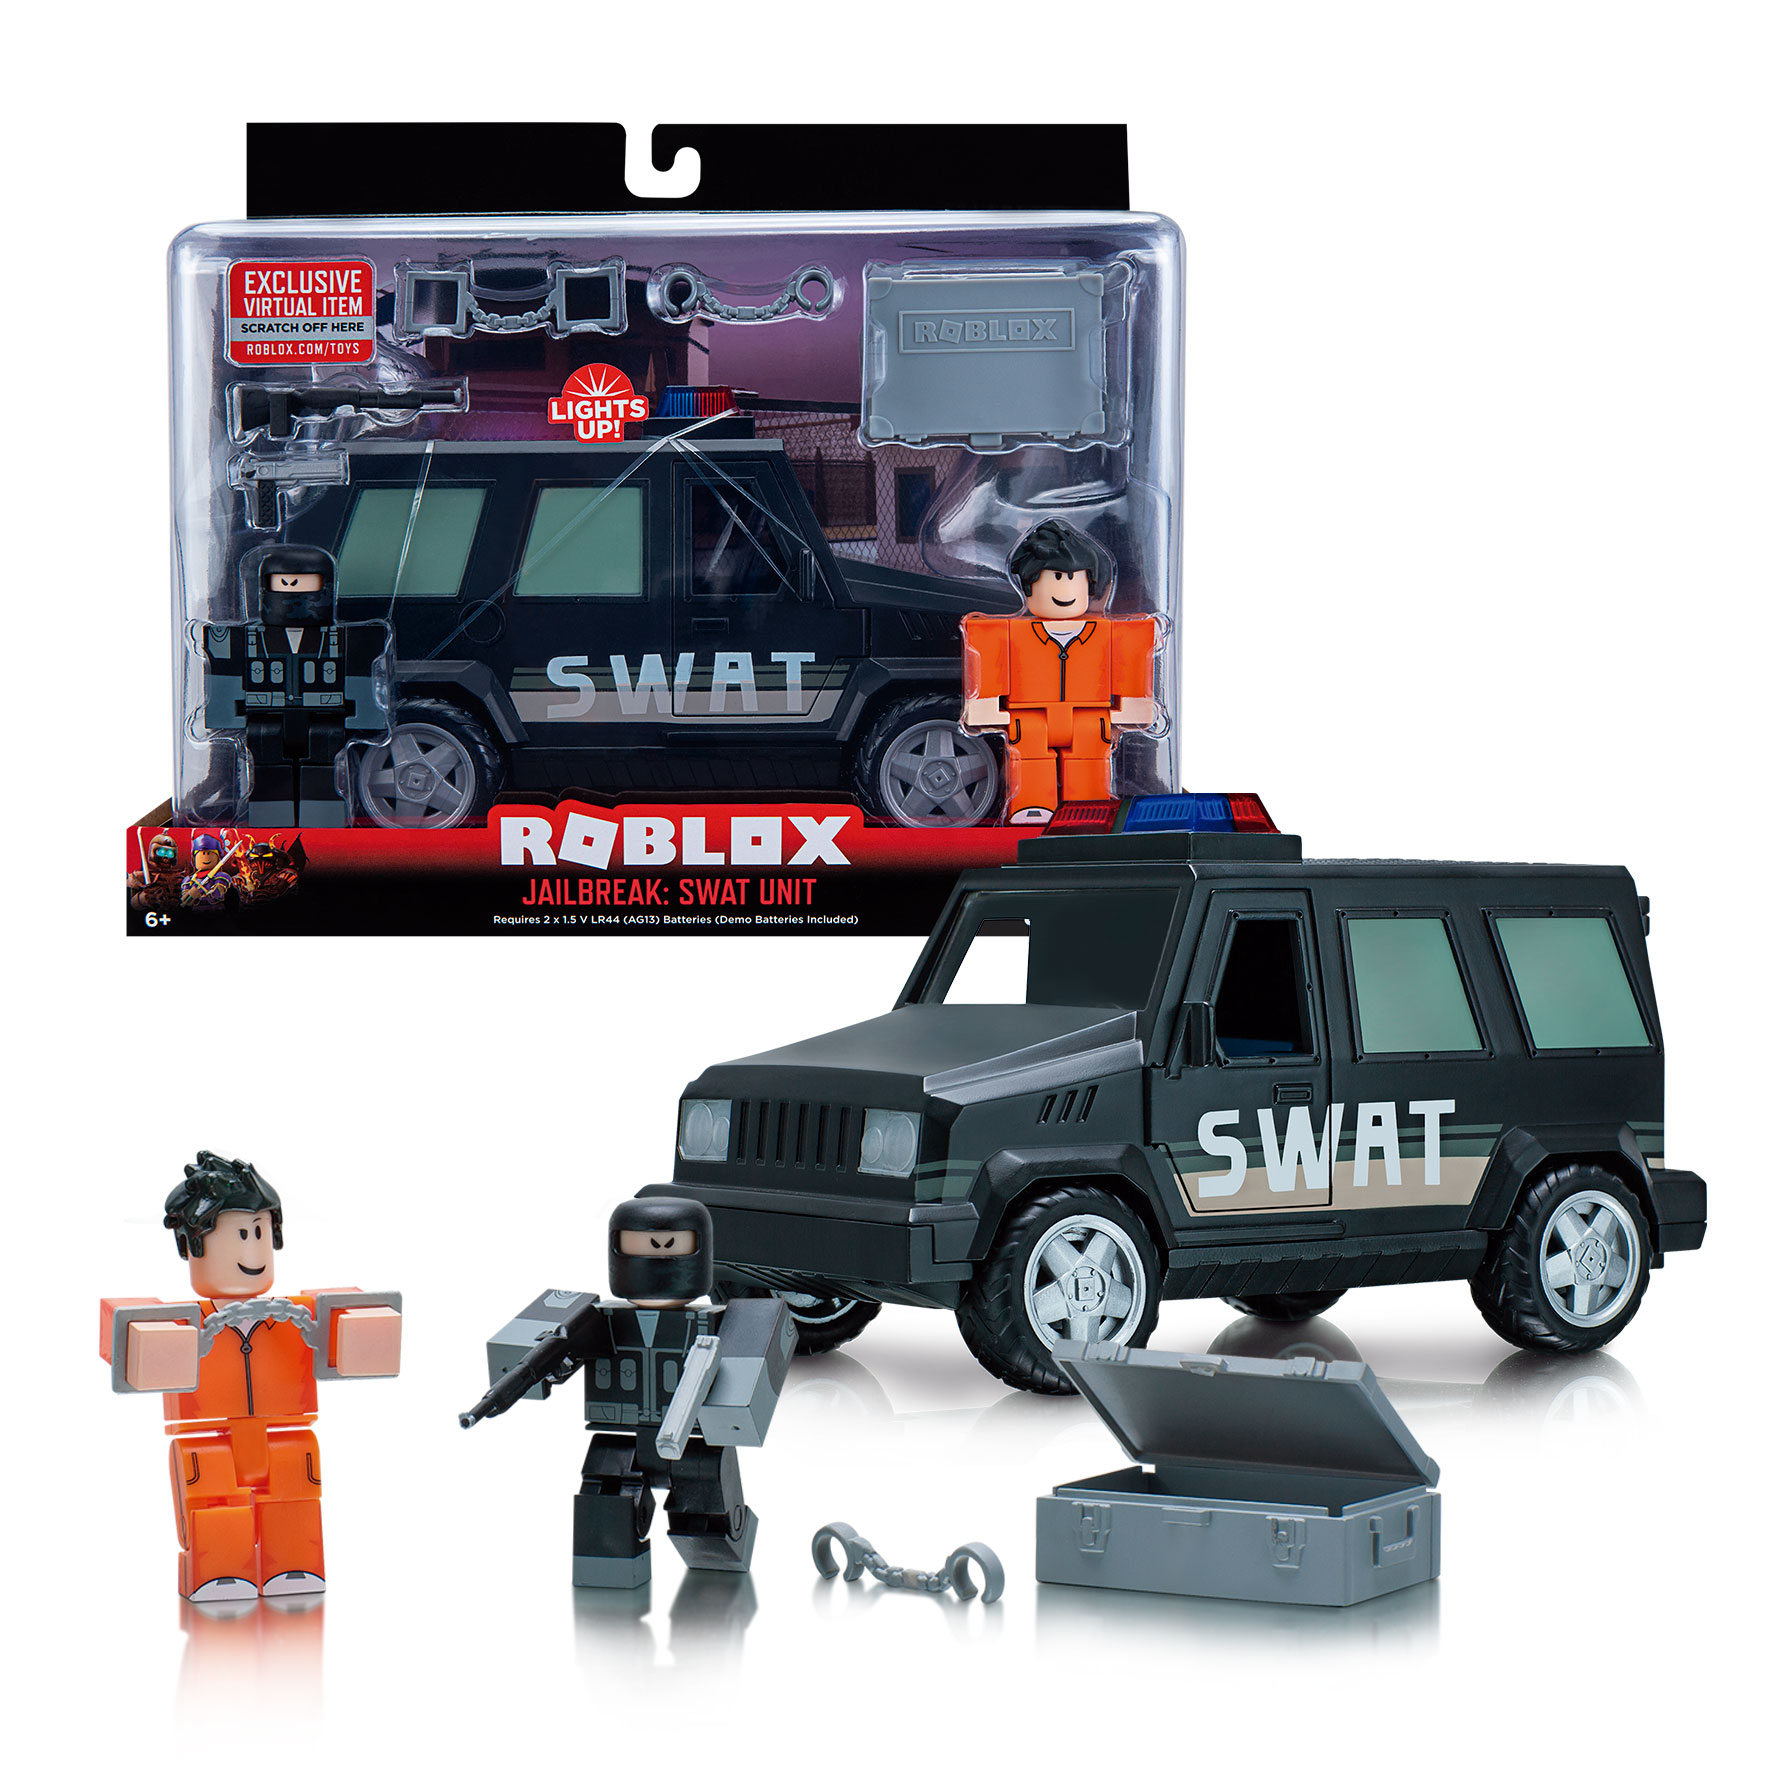 Comprar Roblox vehículo Car Crusher con 2 figuras* de Toy Partner